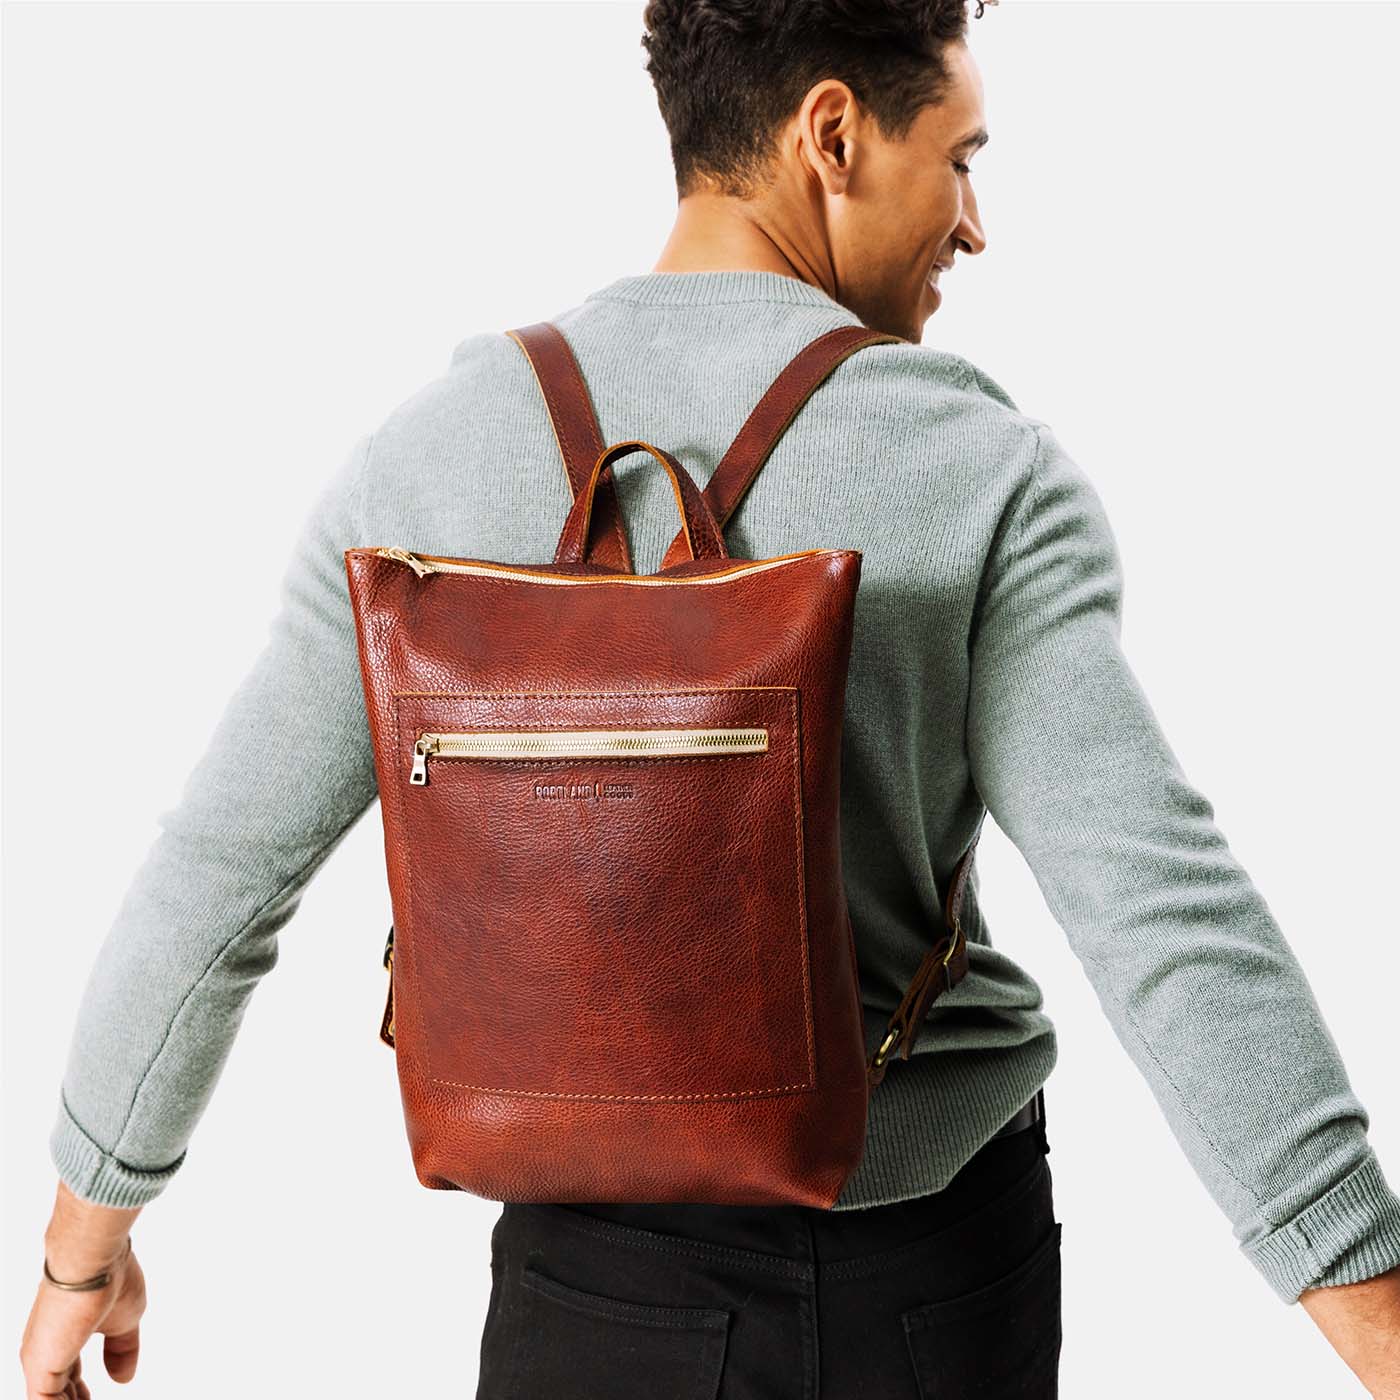 Men's Leather Laptop Backpacks